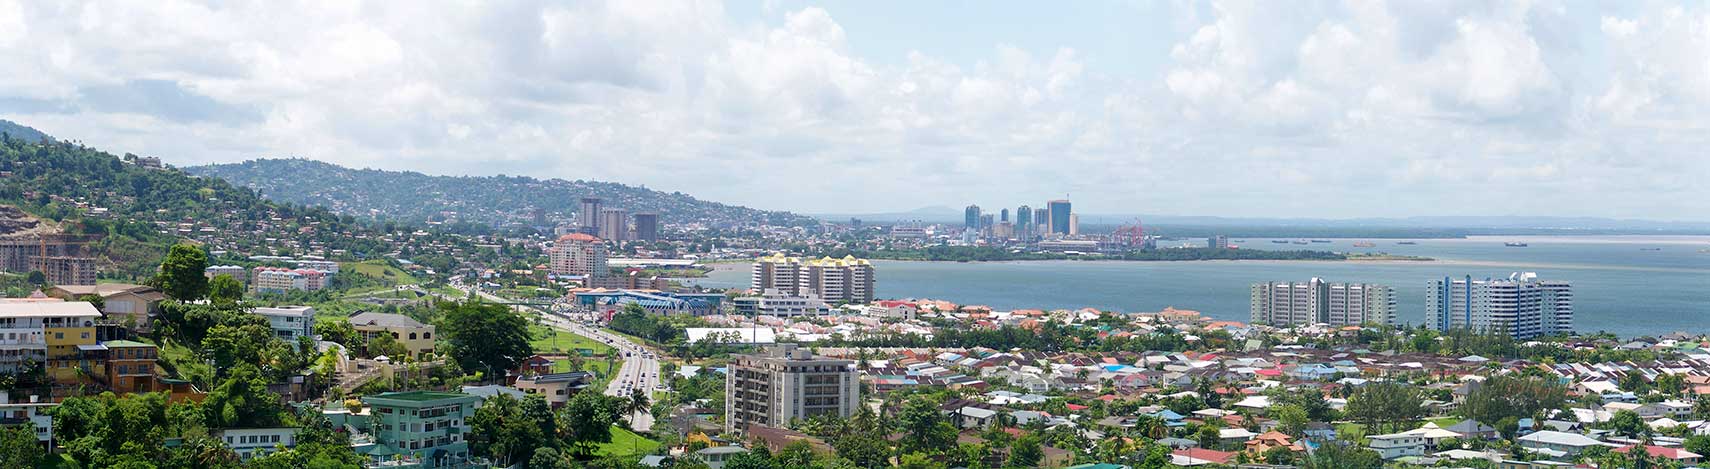 Panorama of Port of Spain, Trinidad